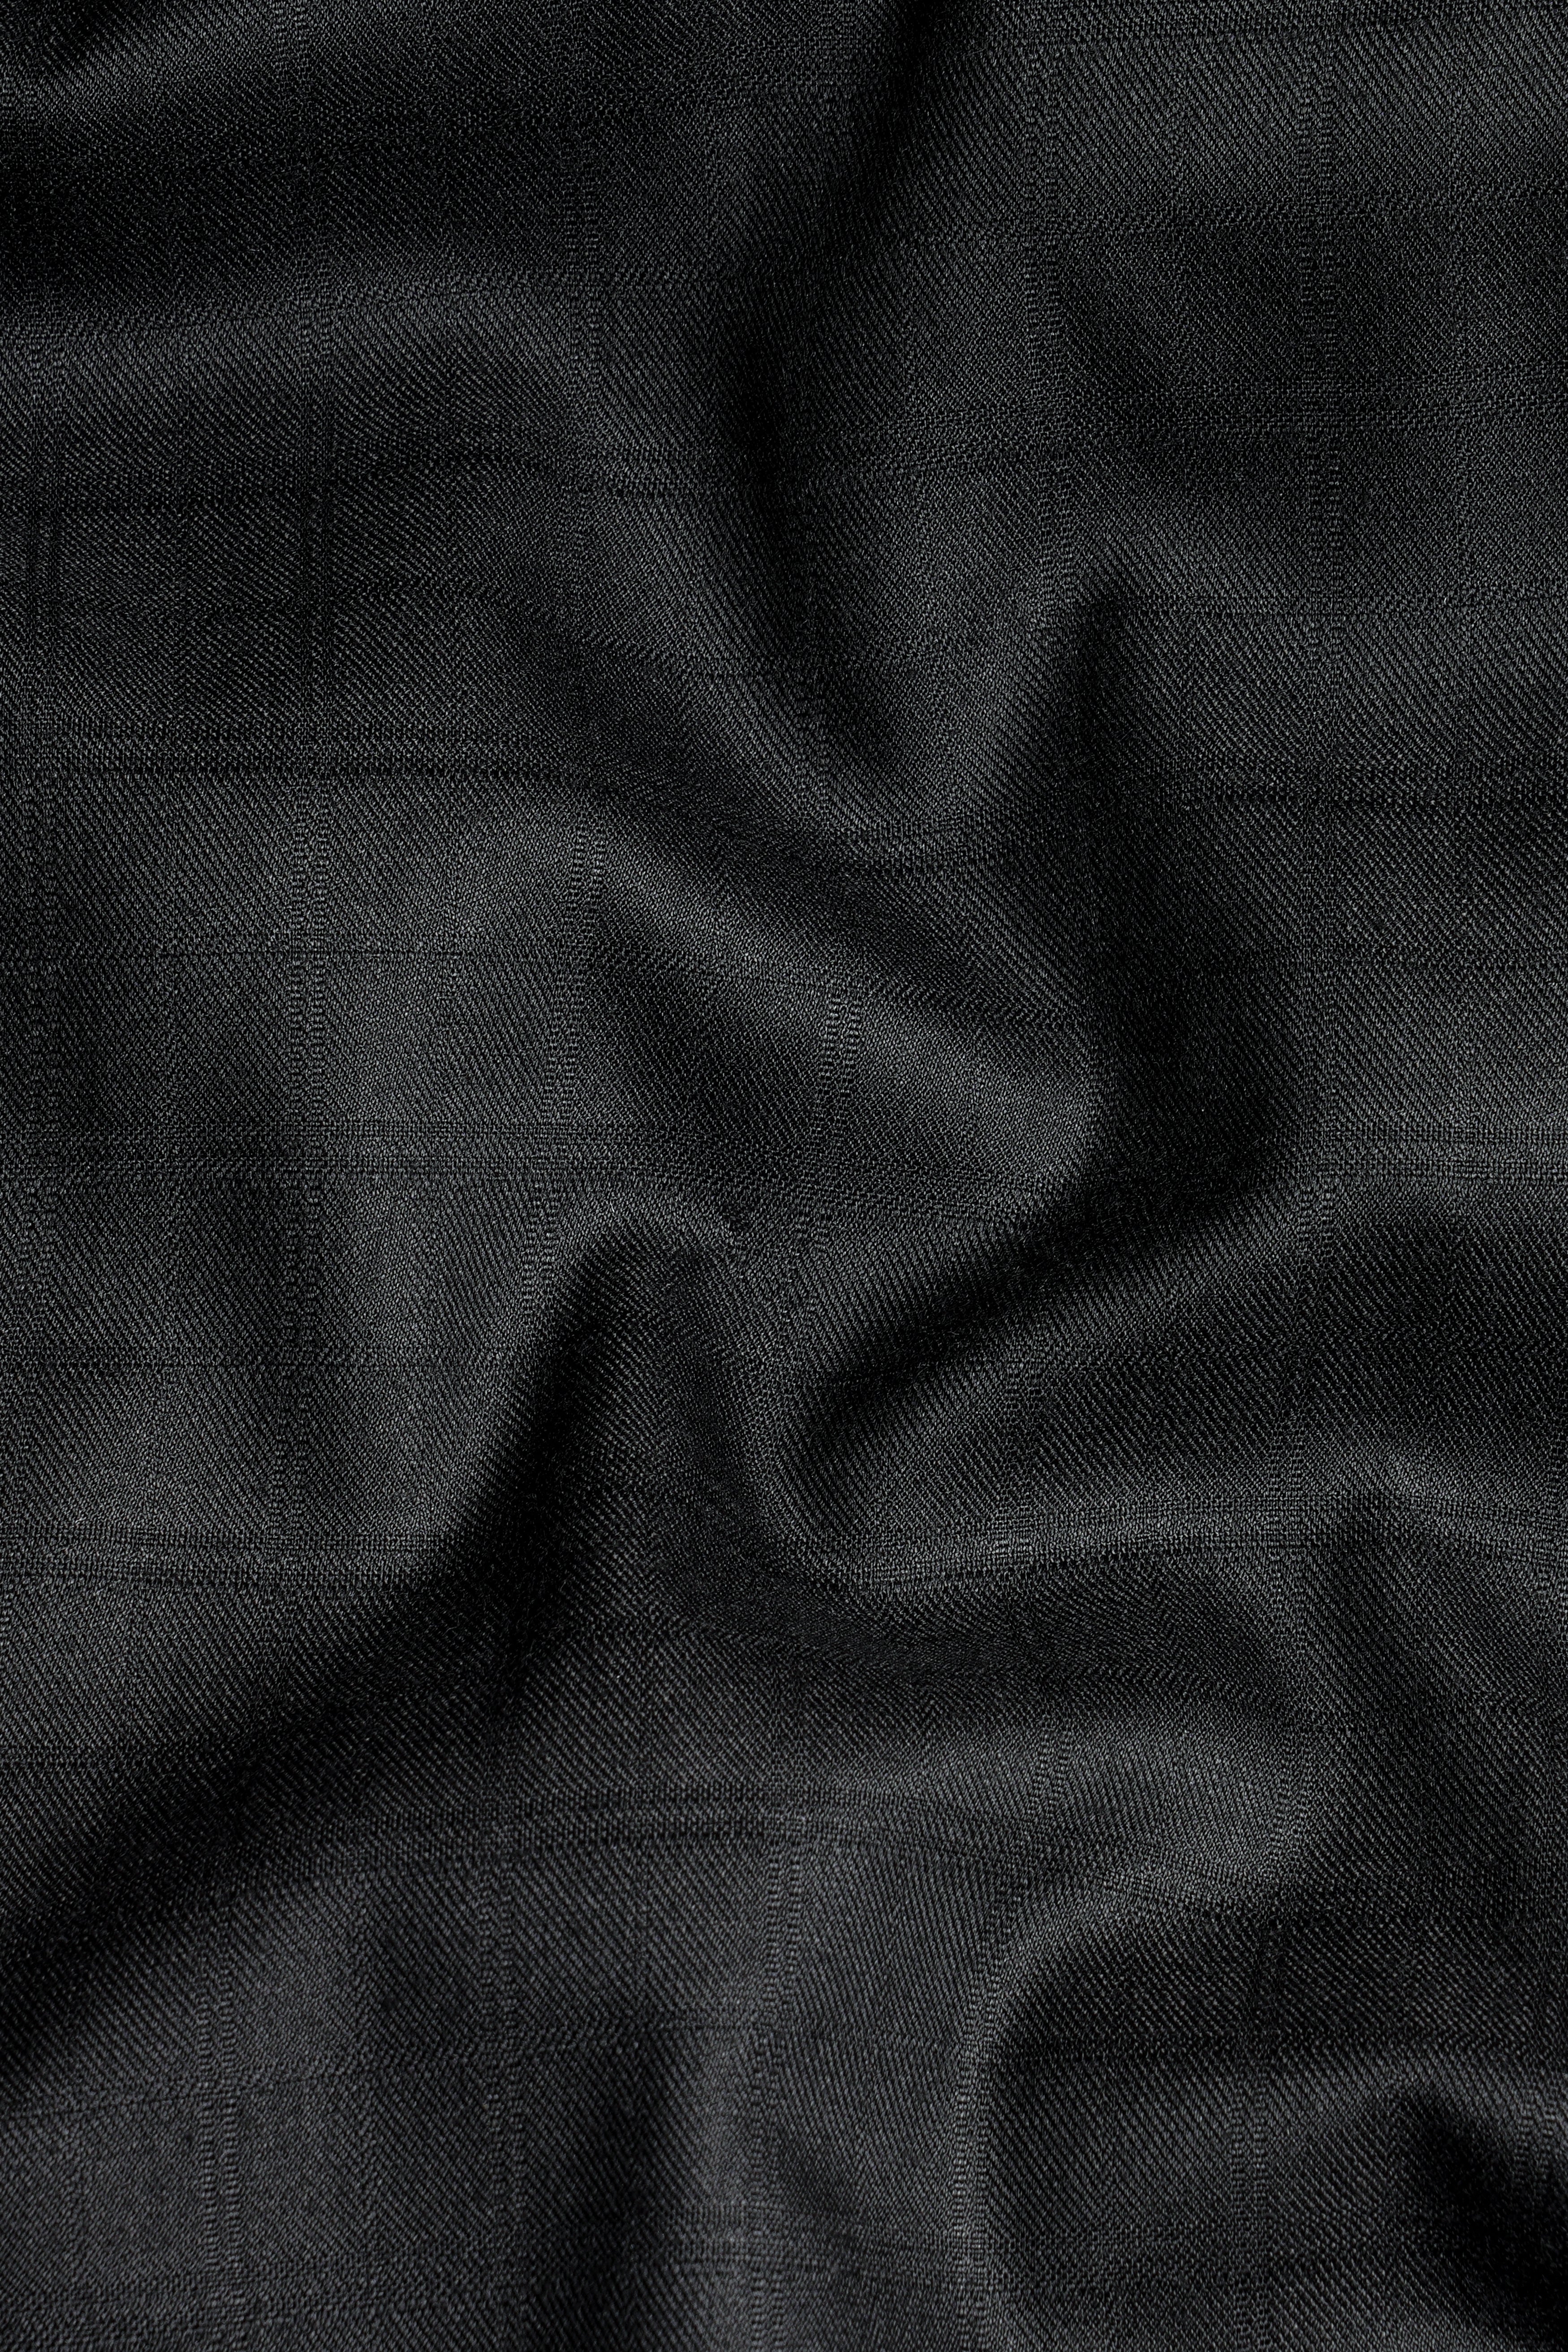 Abbey Gray Subtle Checkered Wool Rich Pant T3053-28, T3053-30, T3053-32, T3053-34, T3053-36, T3053-38, T3053-40, T3053-42, T3053-44